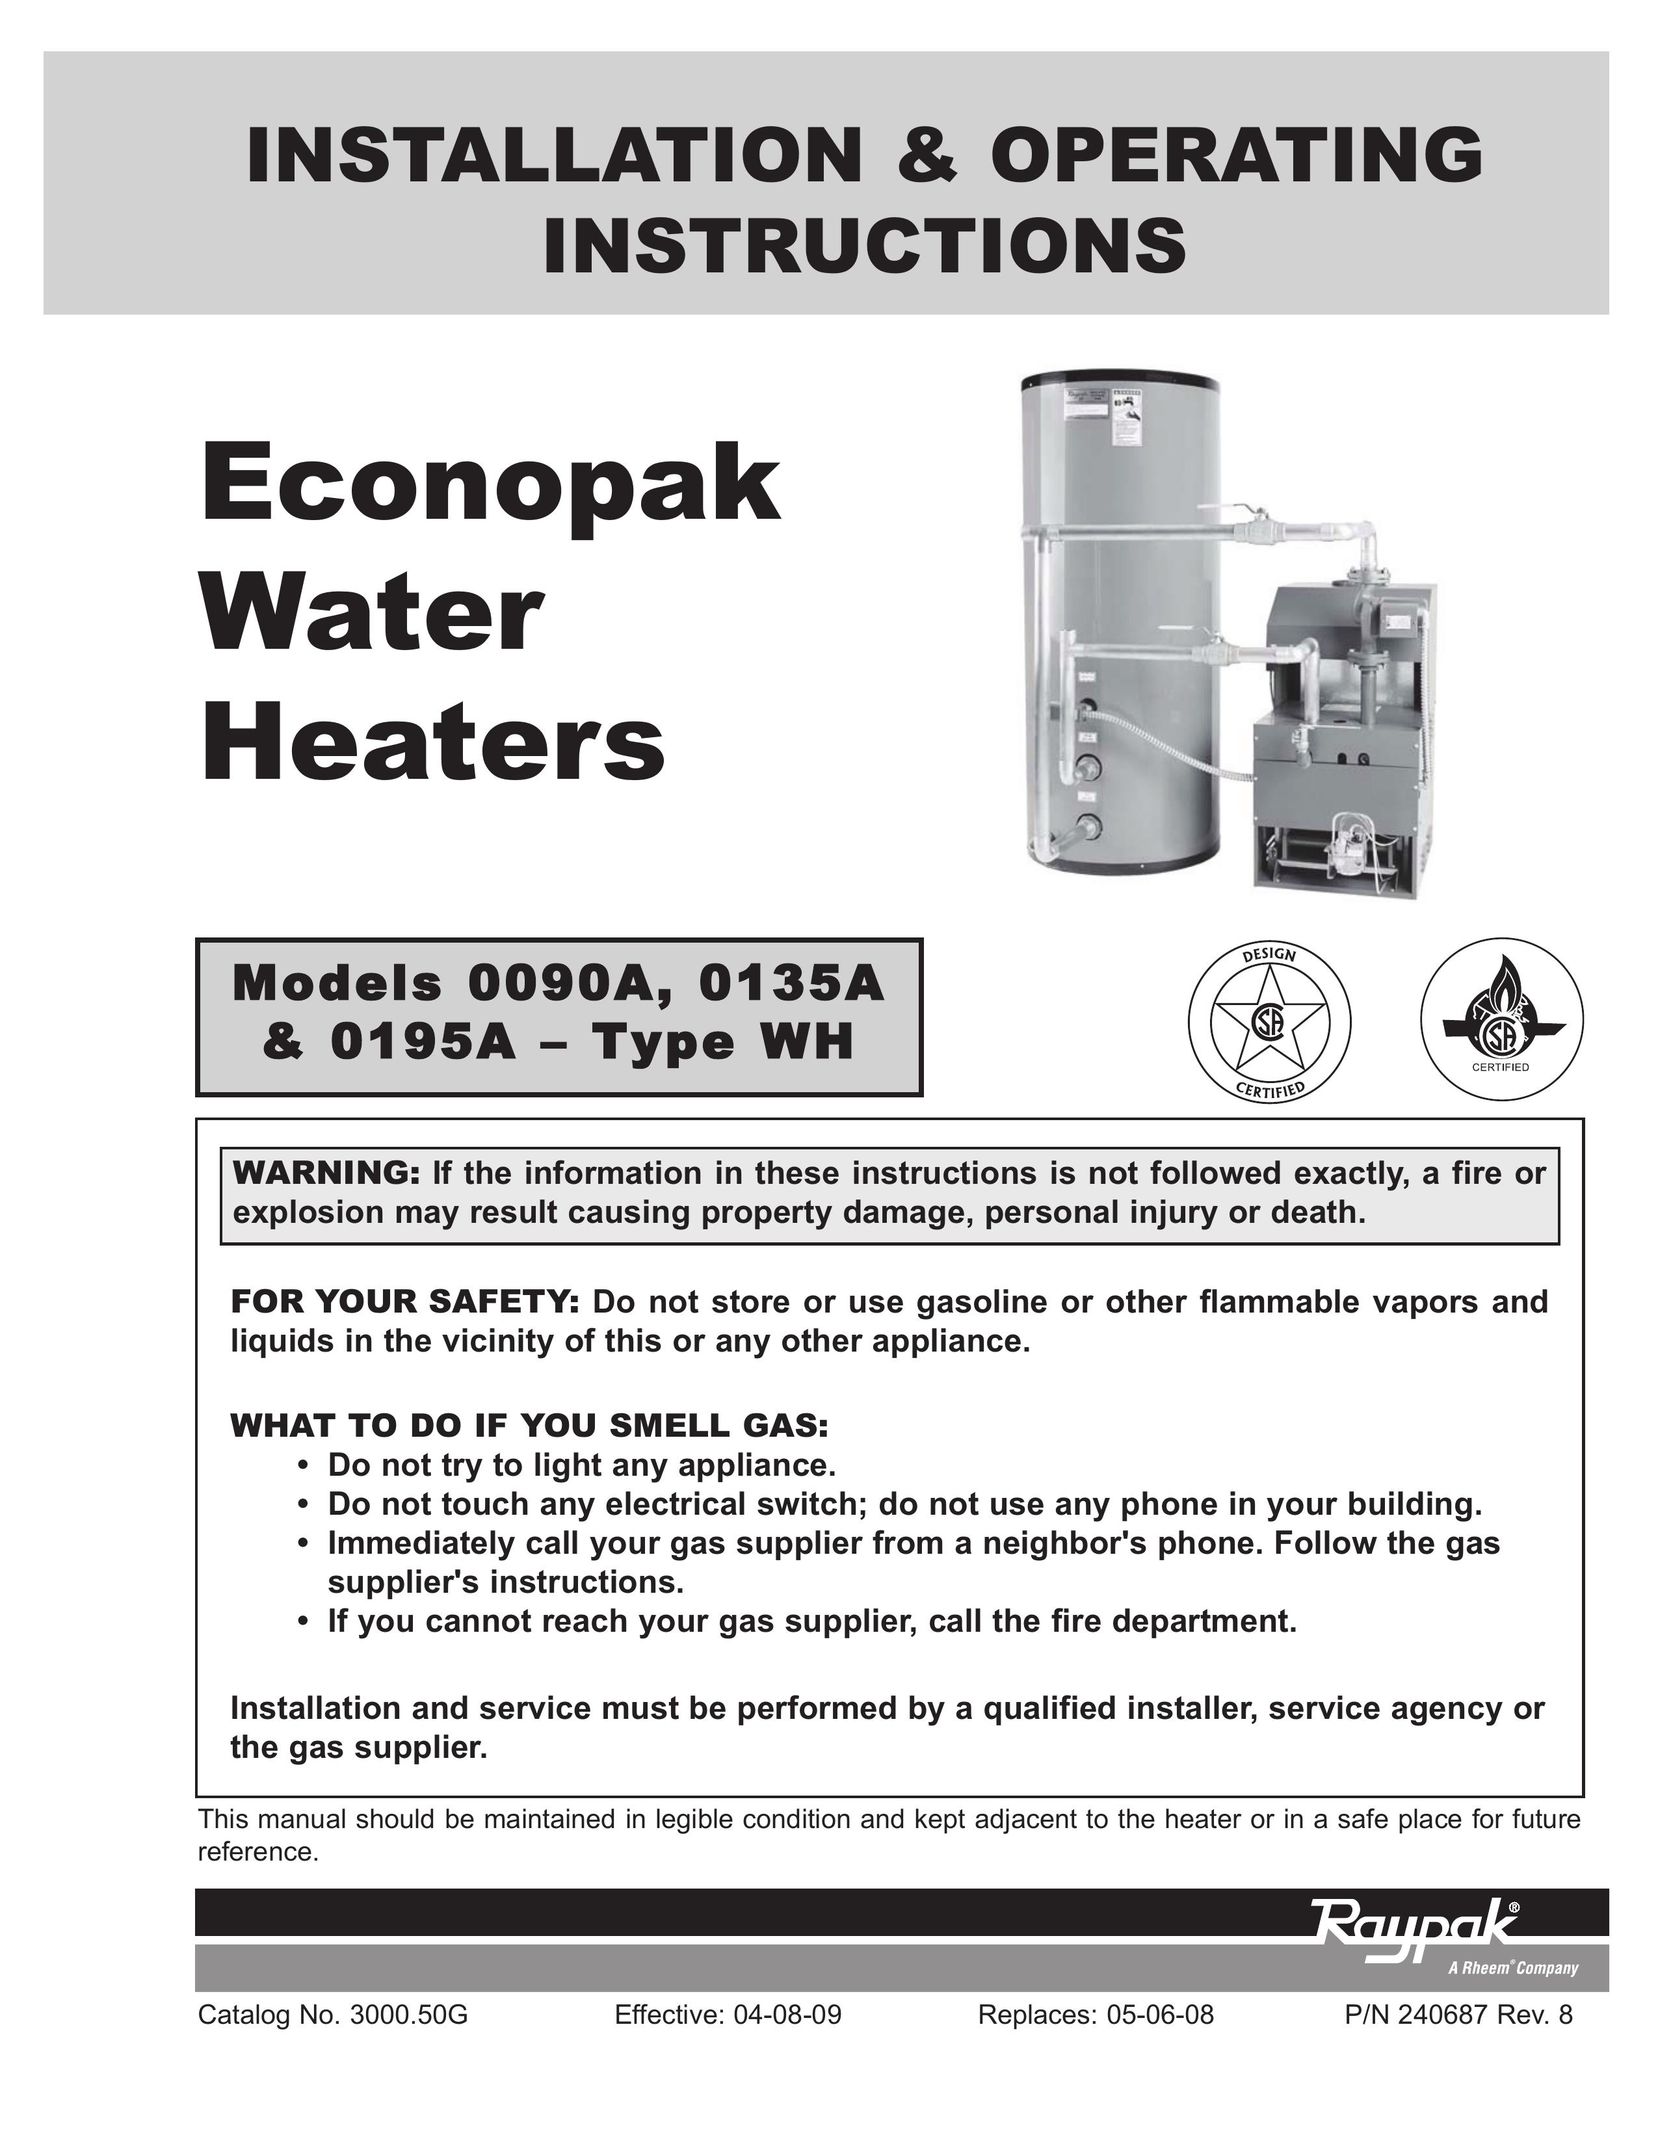 Raypak 0195A Water Heater User Manual